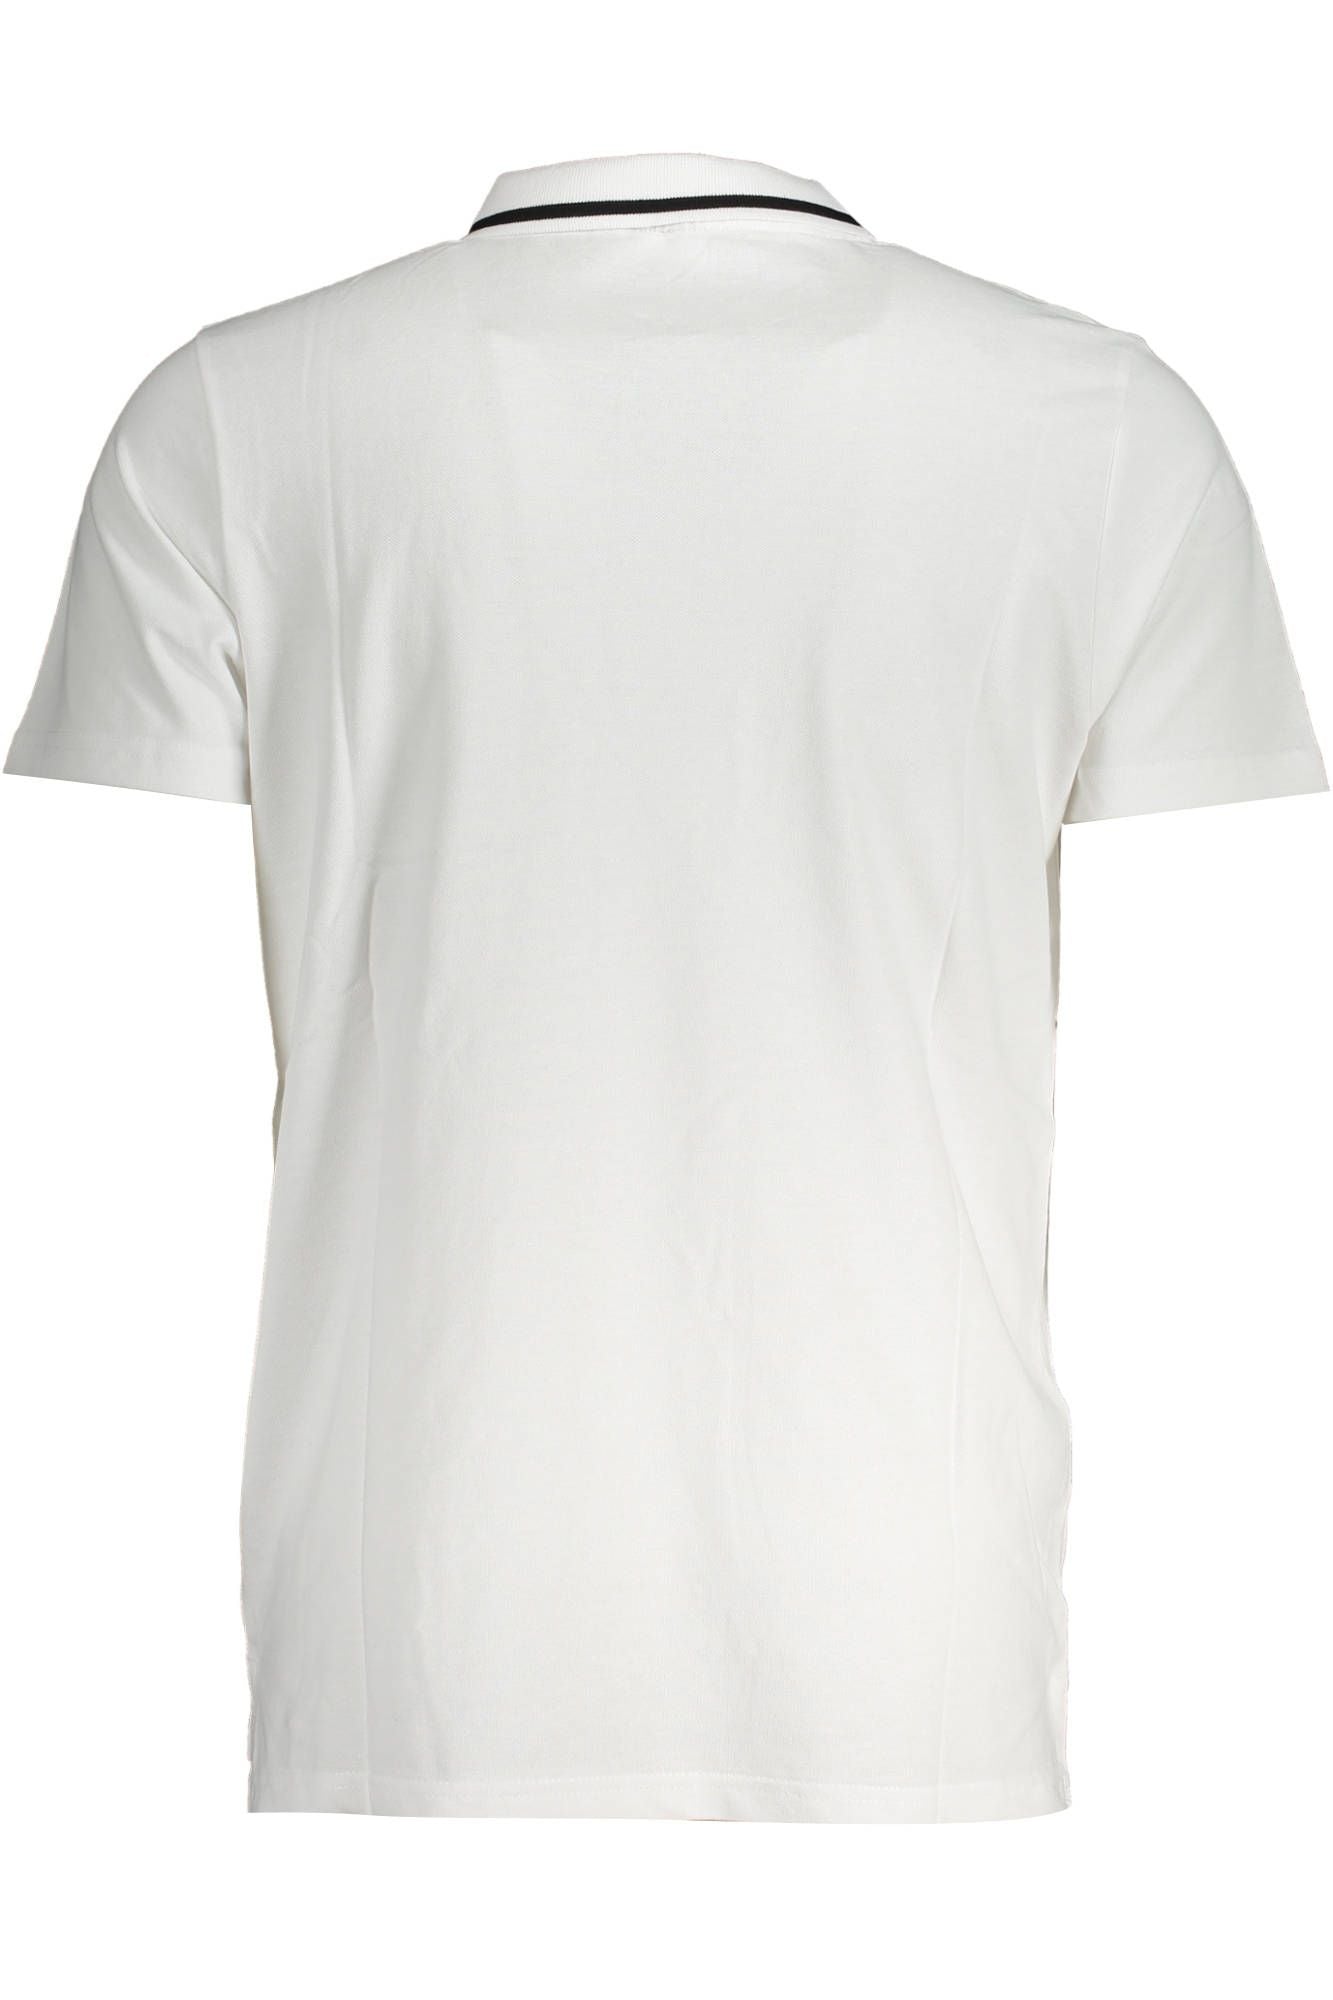 Fila White Cotton Polo Shirt